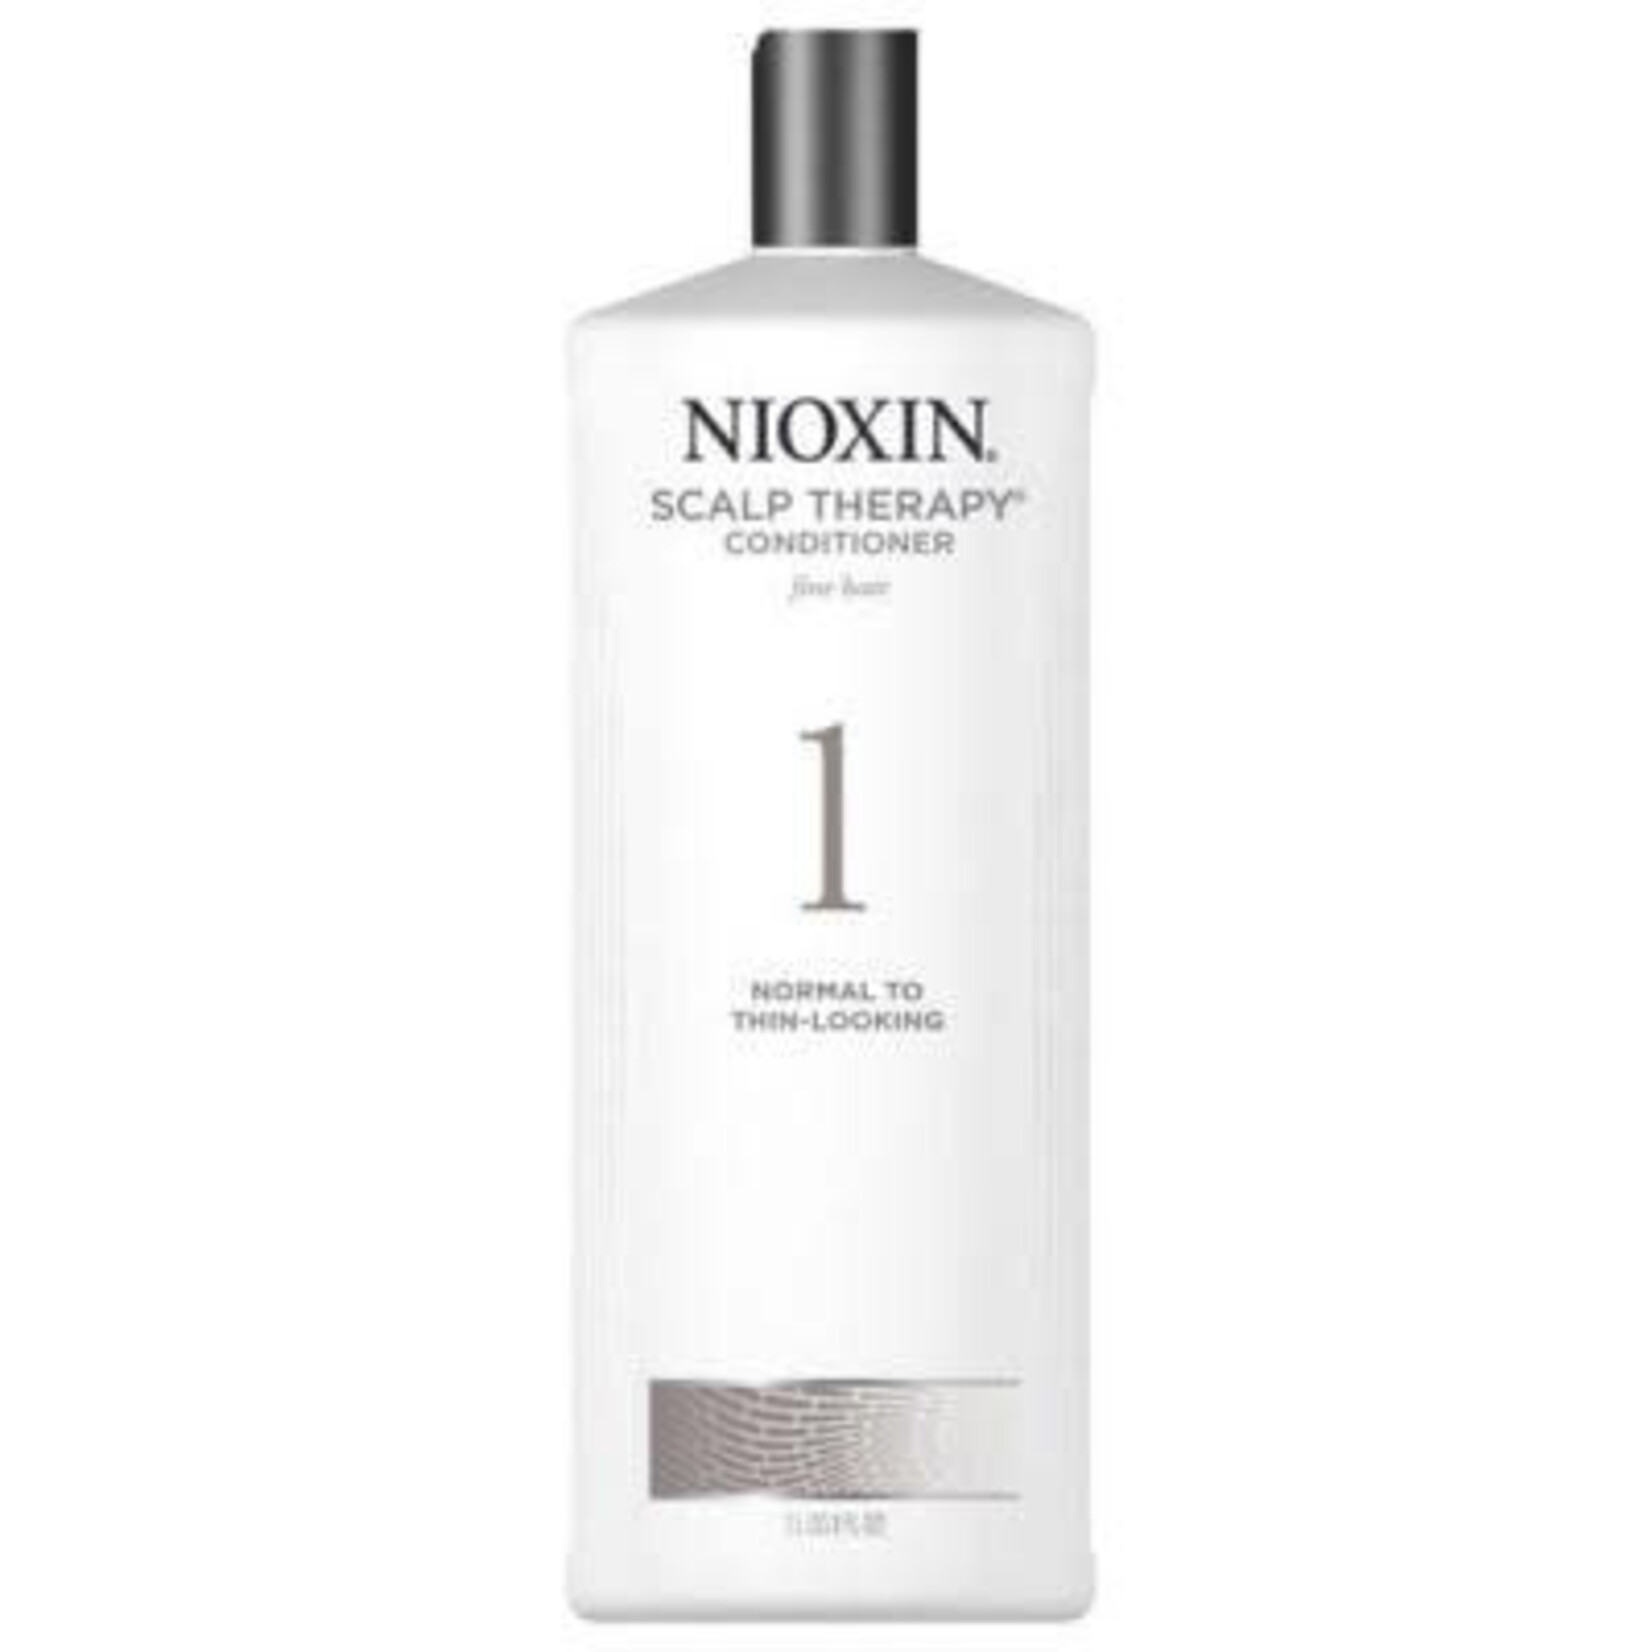 Nioxin Nioxin - Système 1 - Conditioner Litre